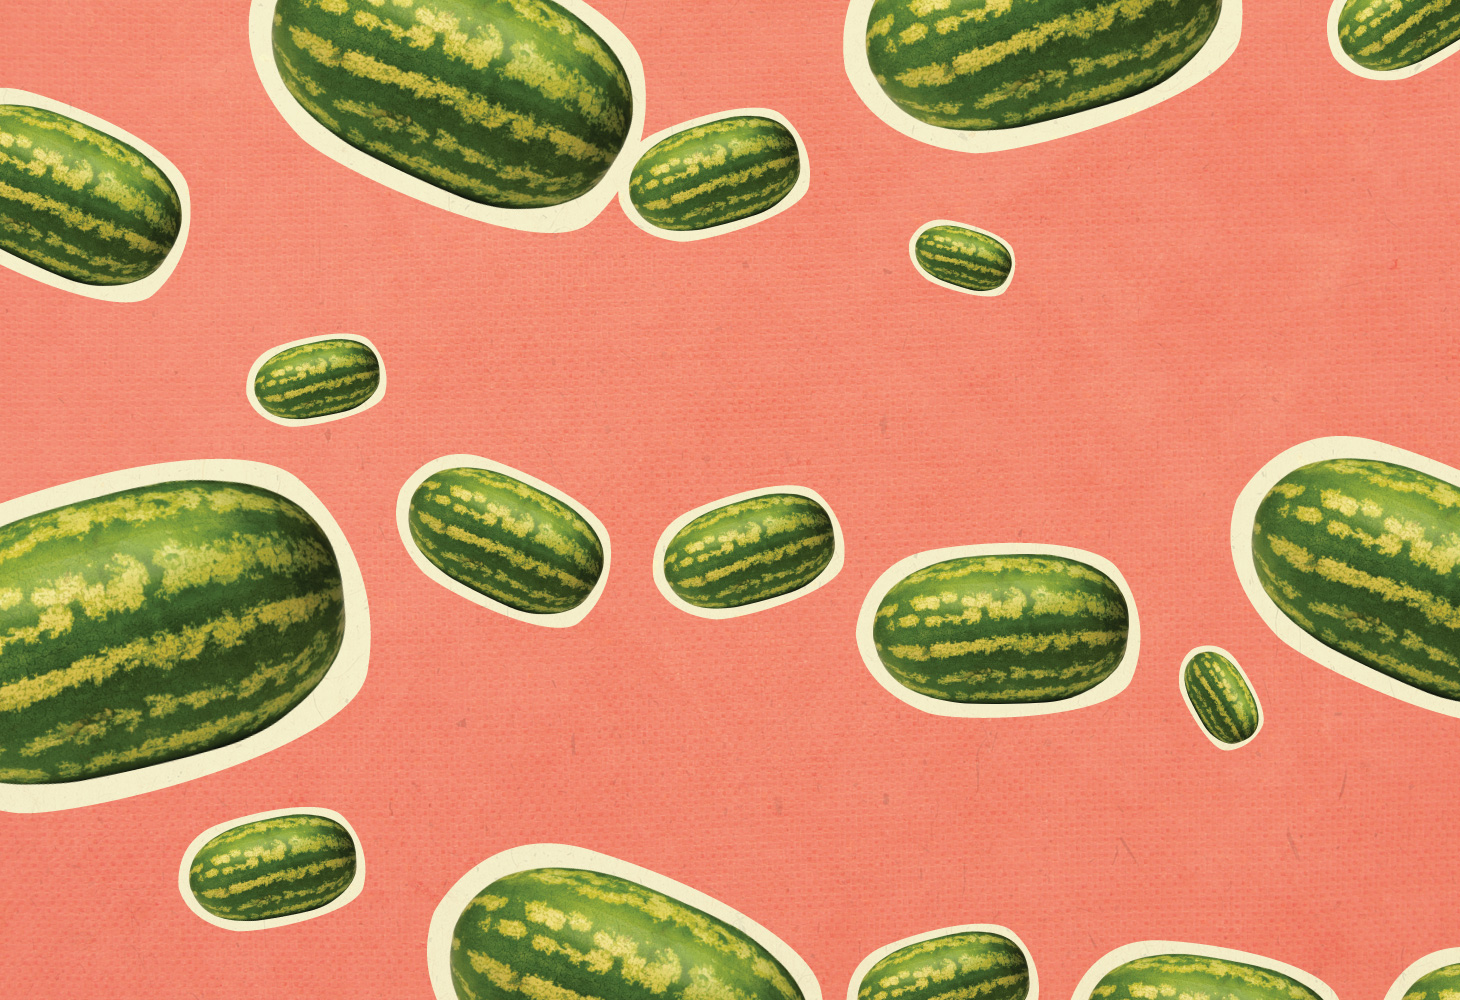 Fruit Salad - Illustrations - Watermelons